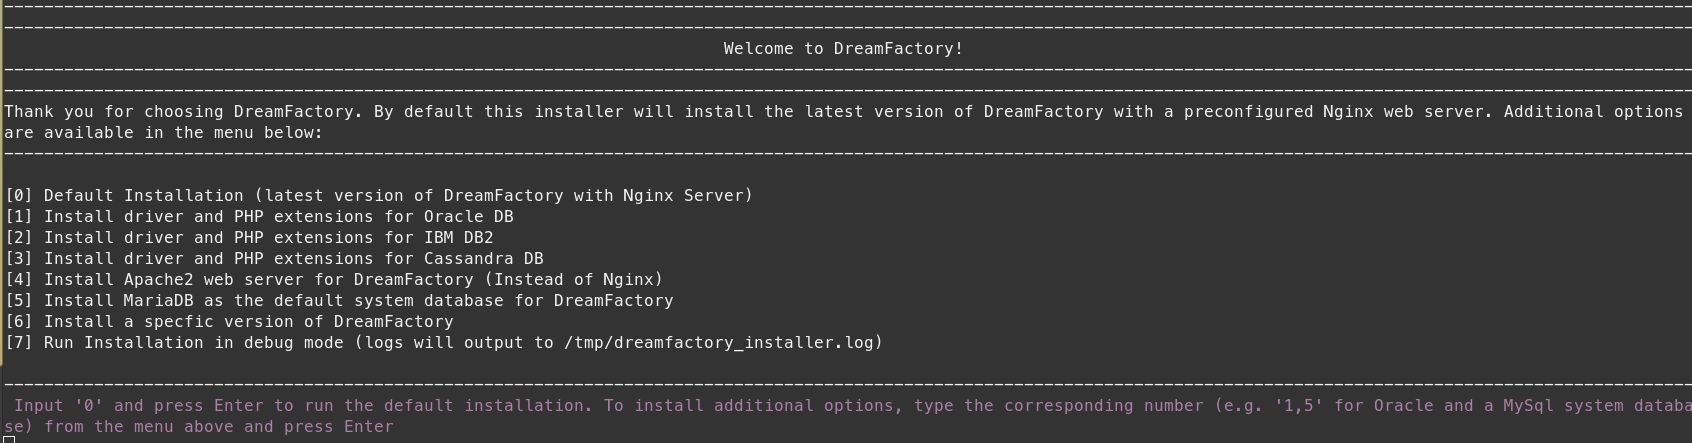 DreamFactory Installer Options